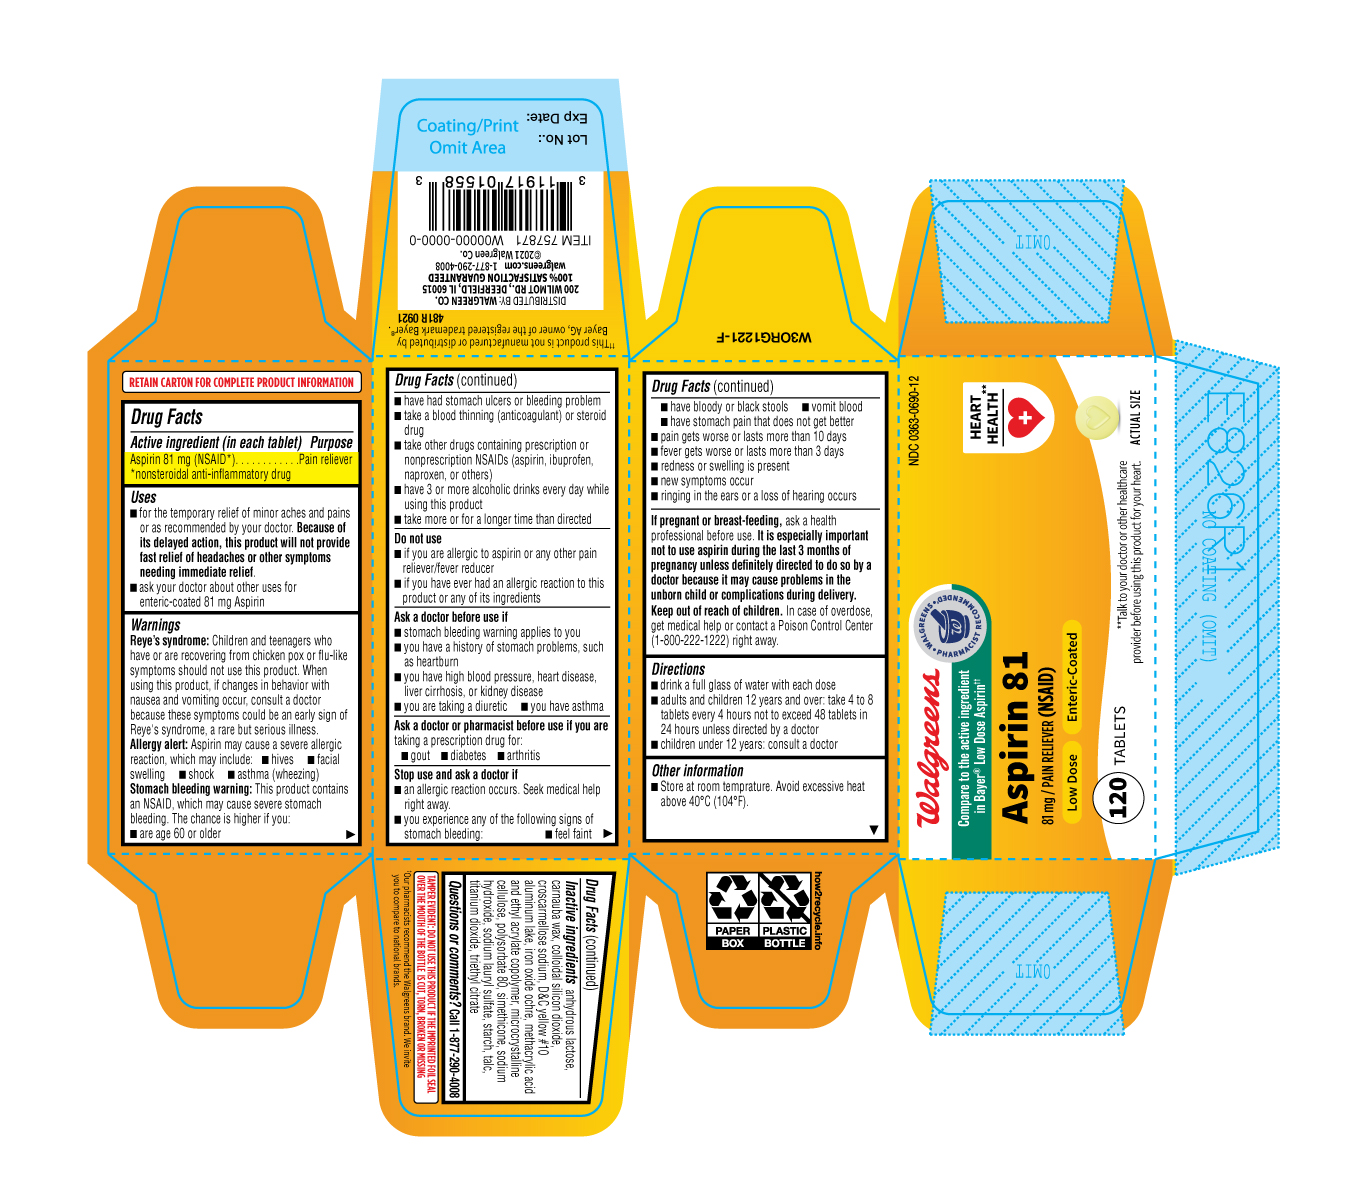 481R-Walgreens-Aspirin-carton-label-120s